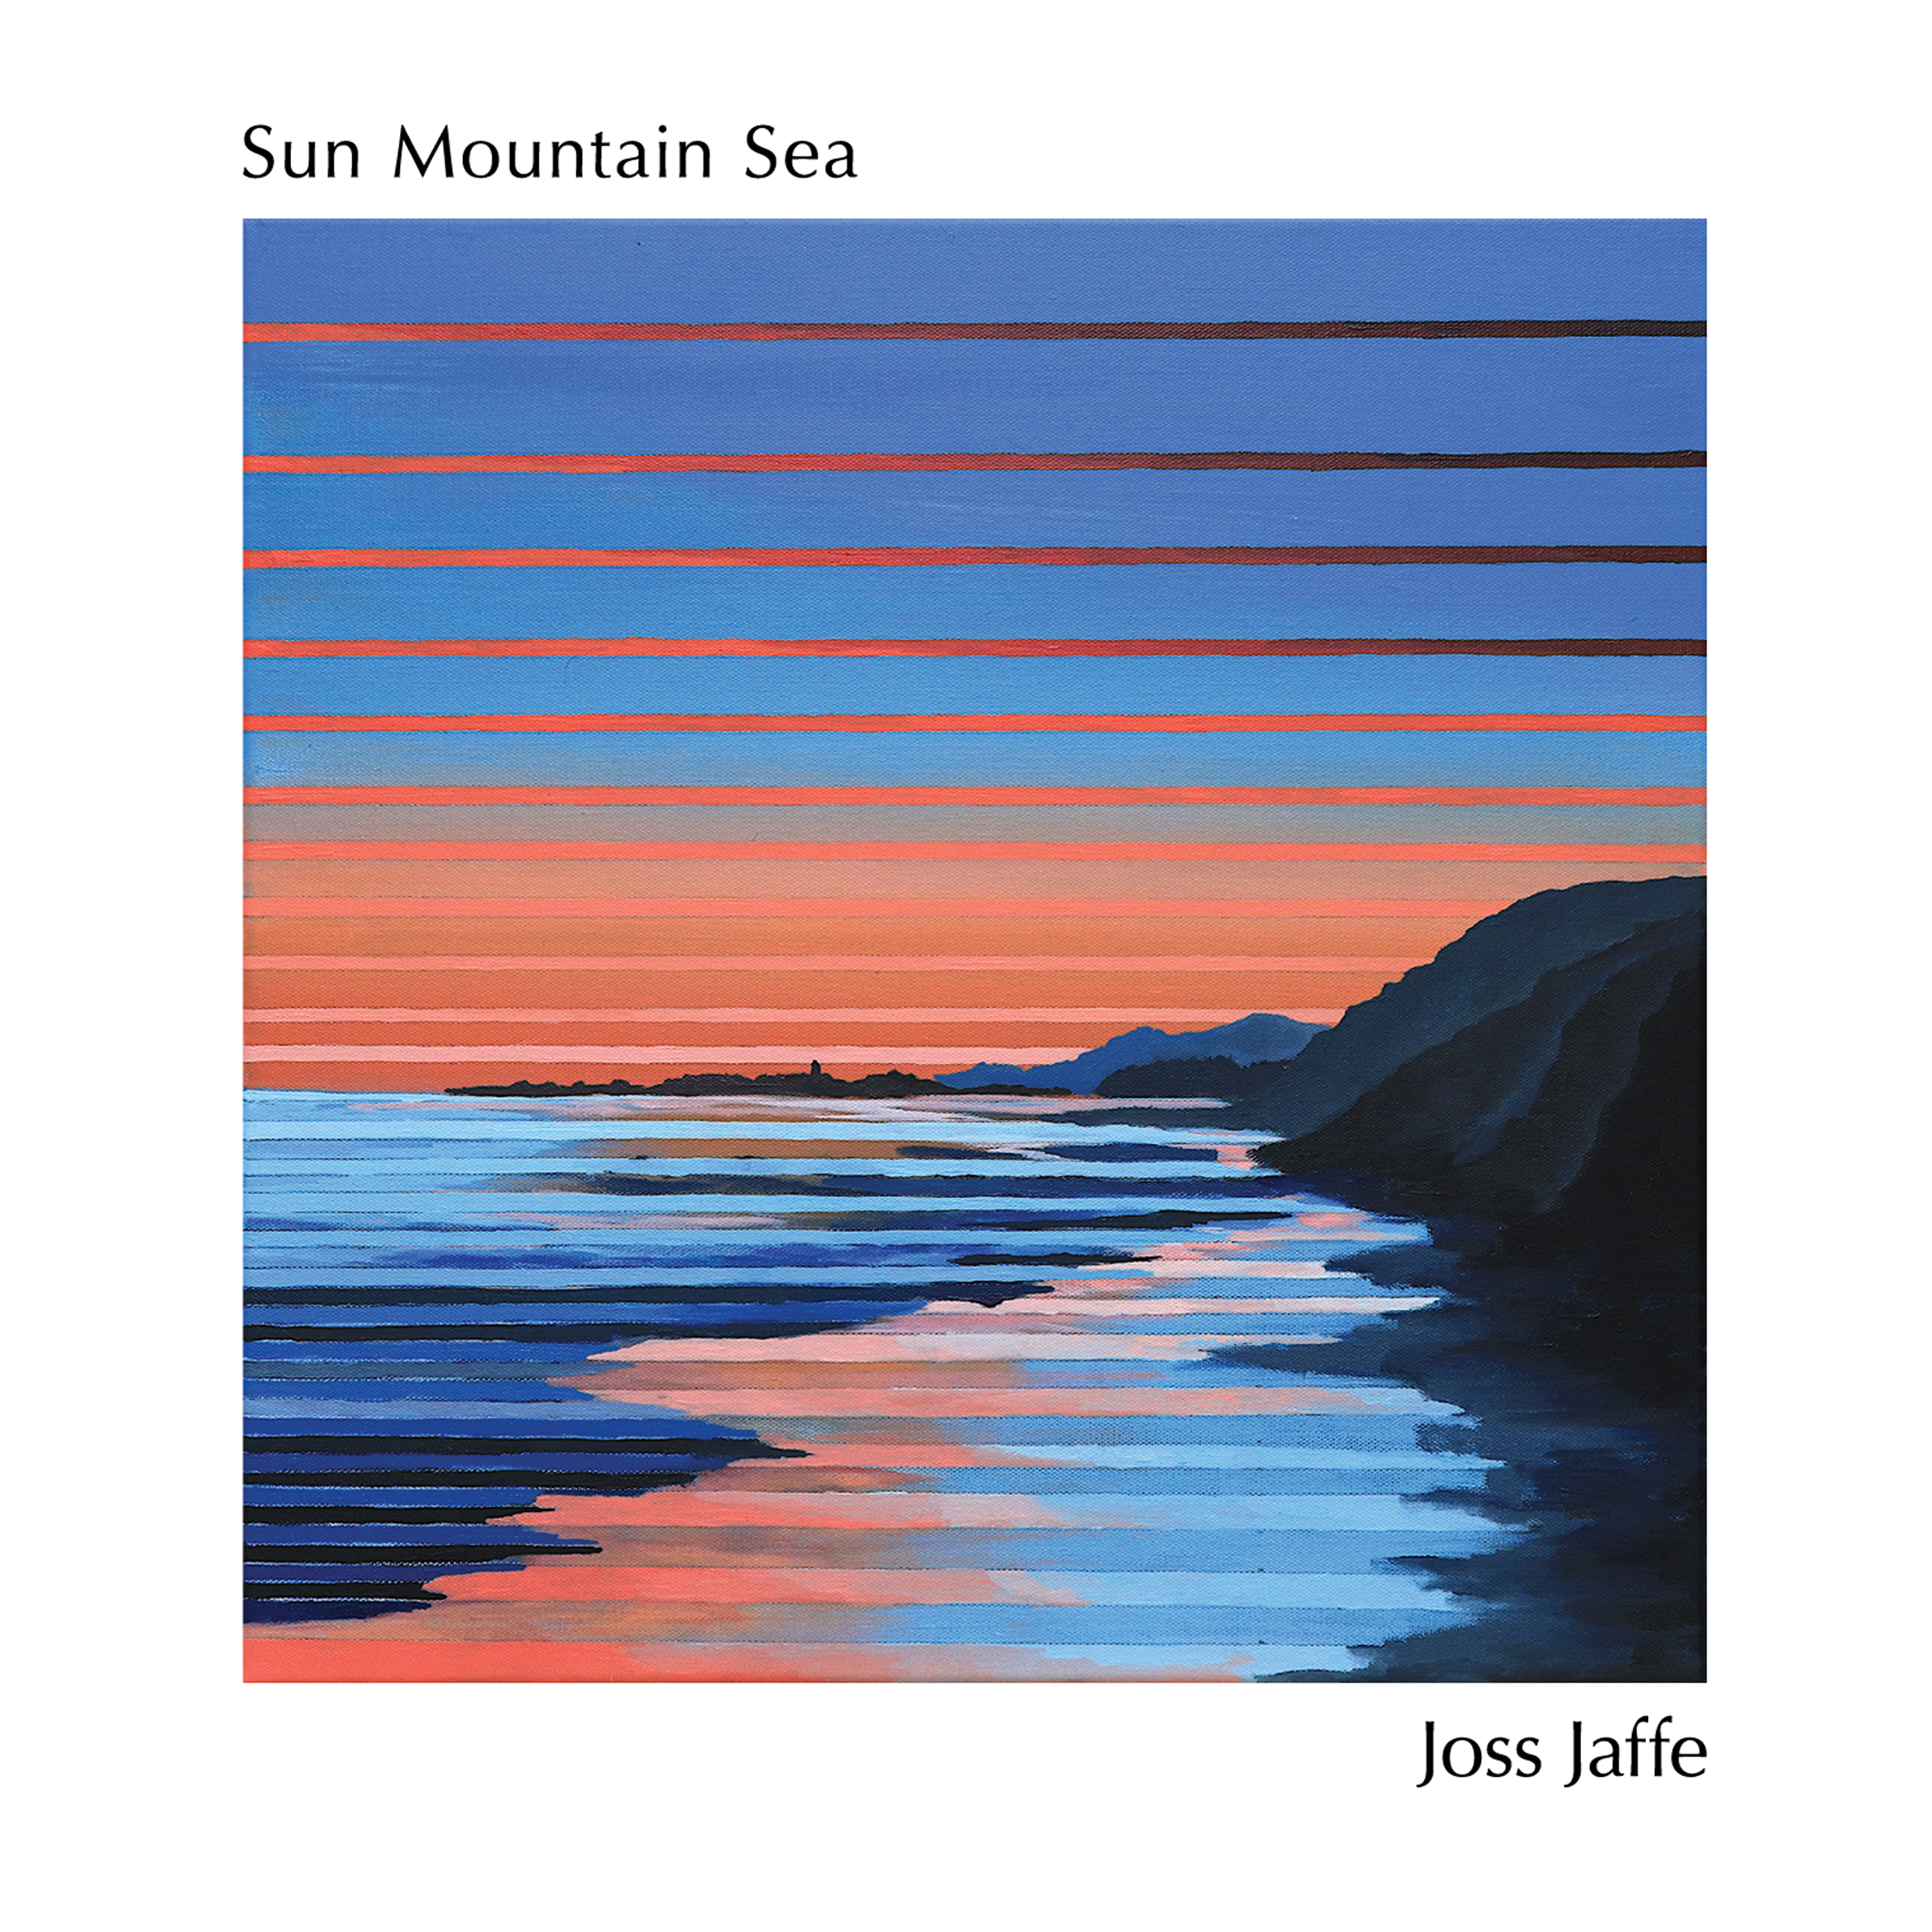 Joss Jaffe releases new album, "Sun Mountain Sea"